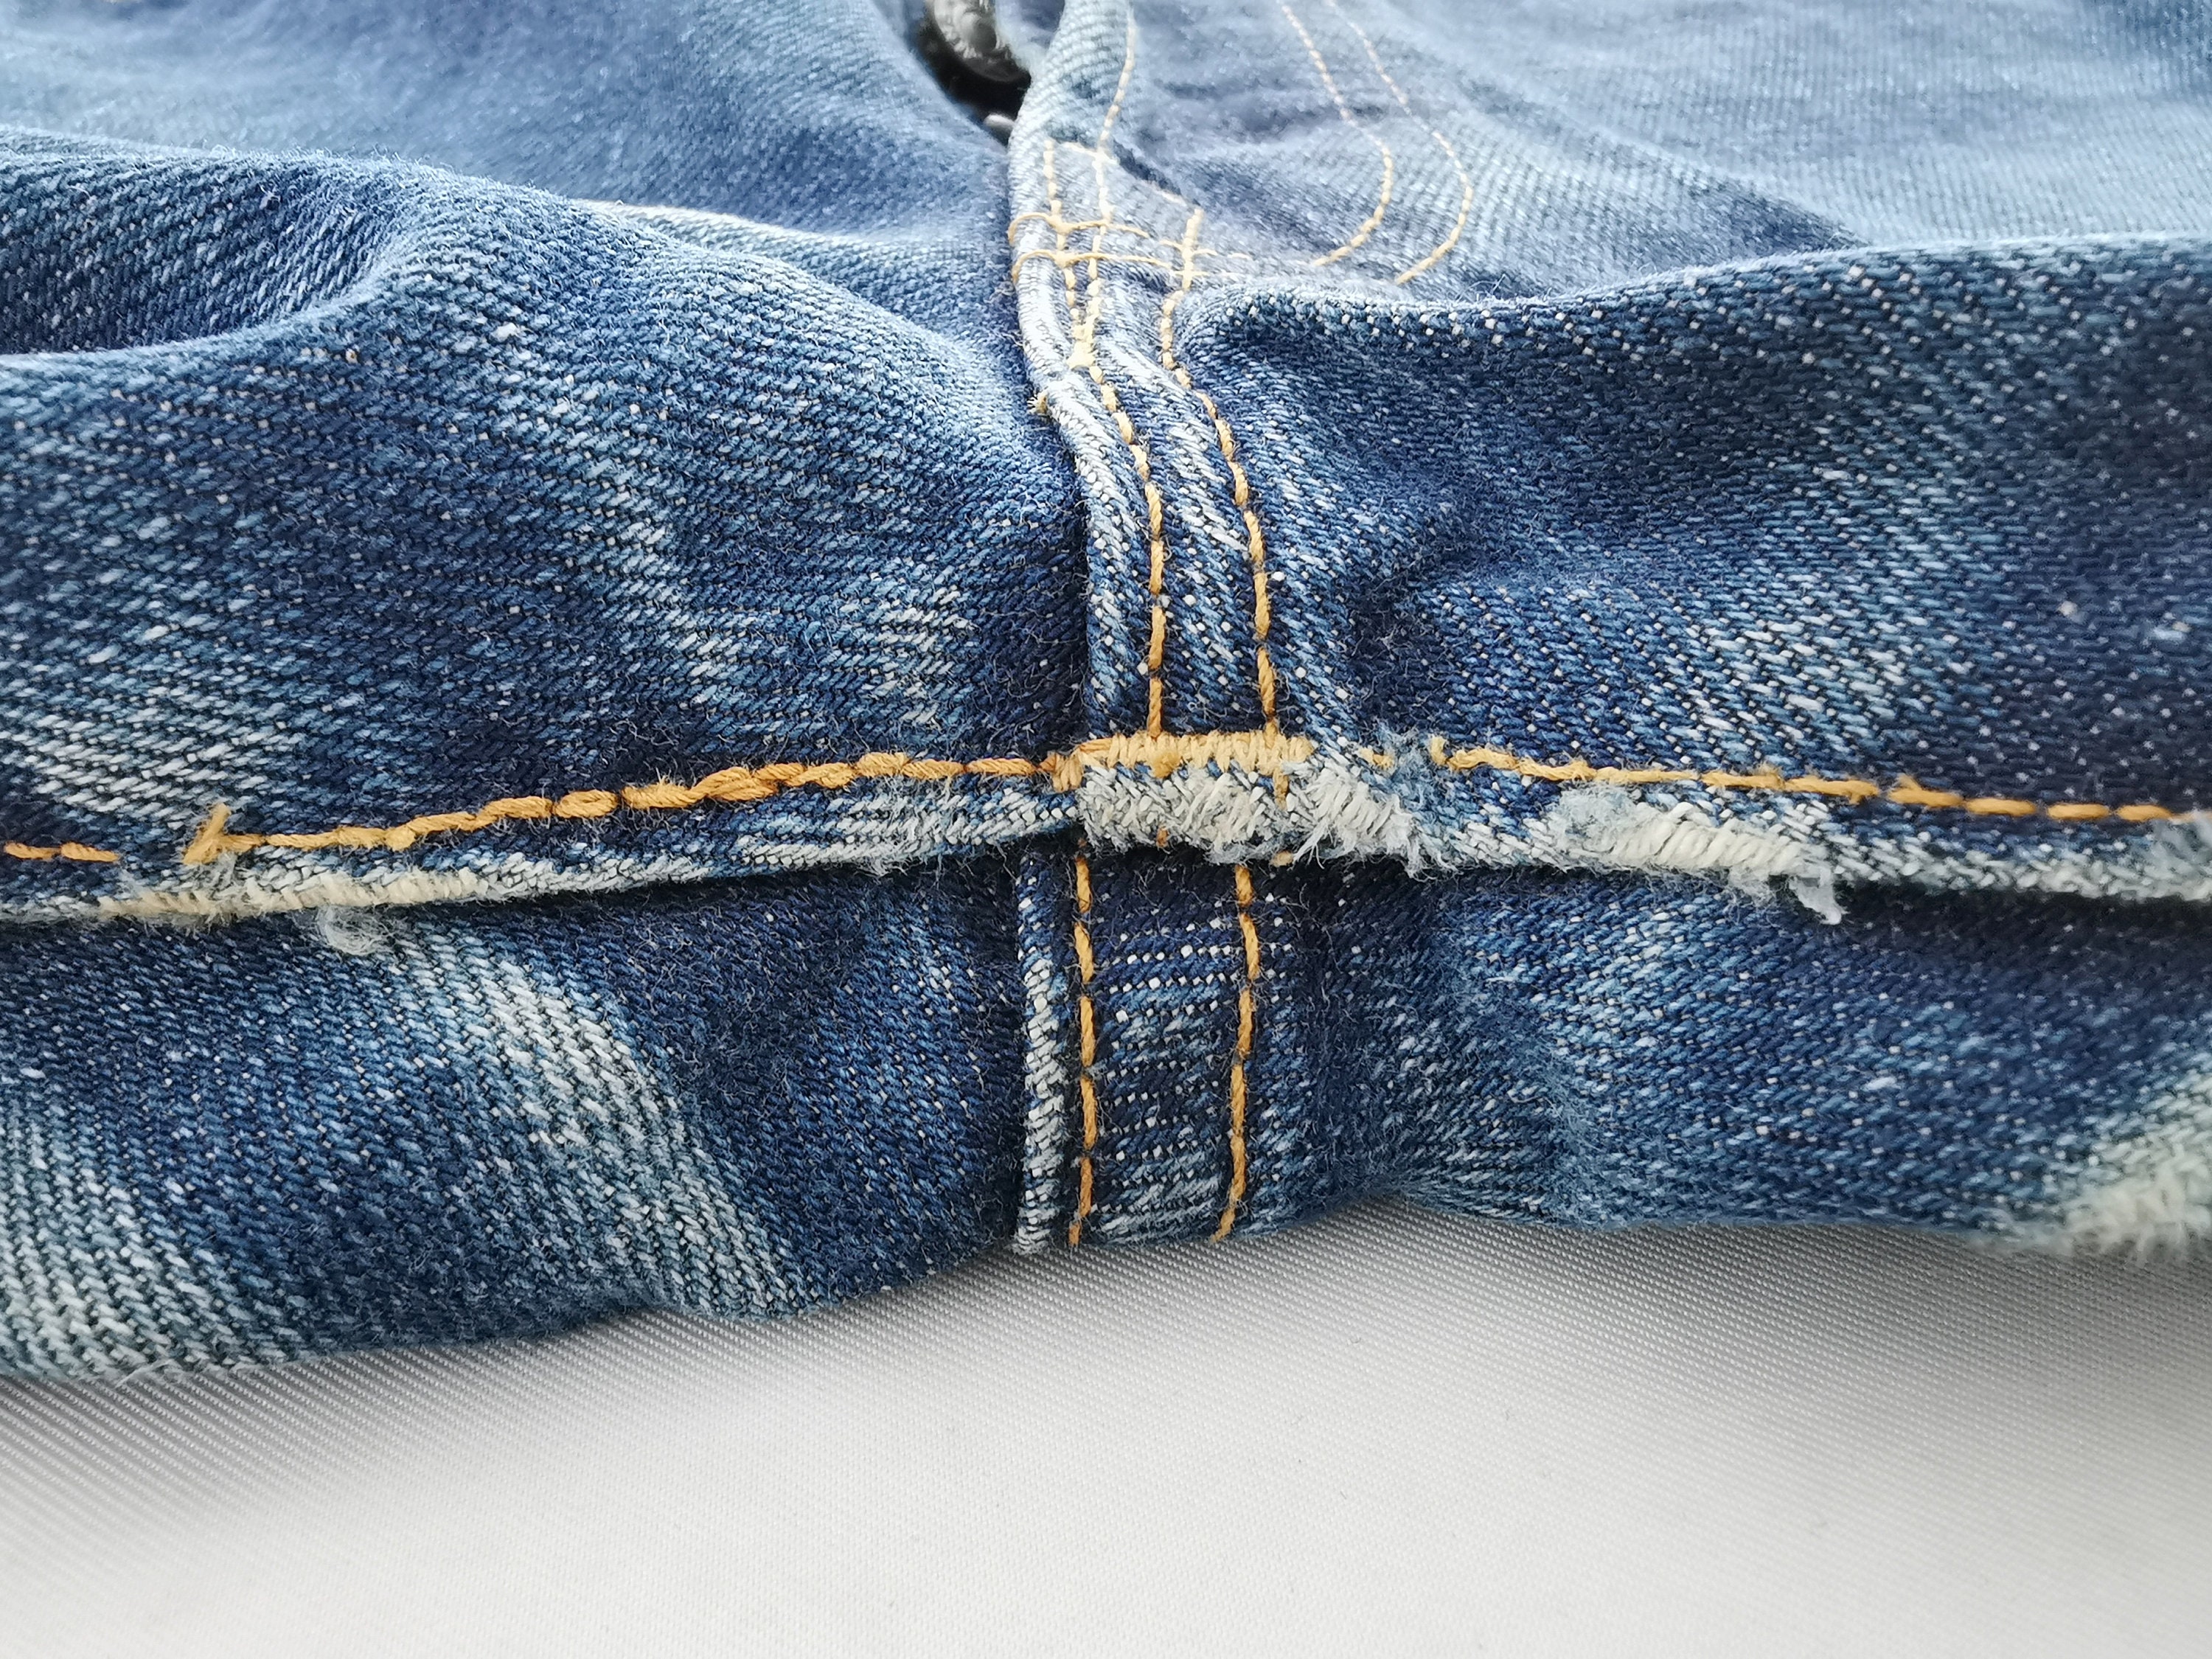 Denime Kyoto Jeans Selvedge Vintage Denime Kyoto Denim Jeans Pants 